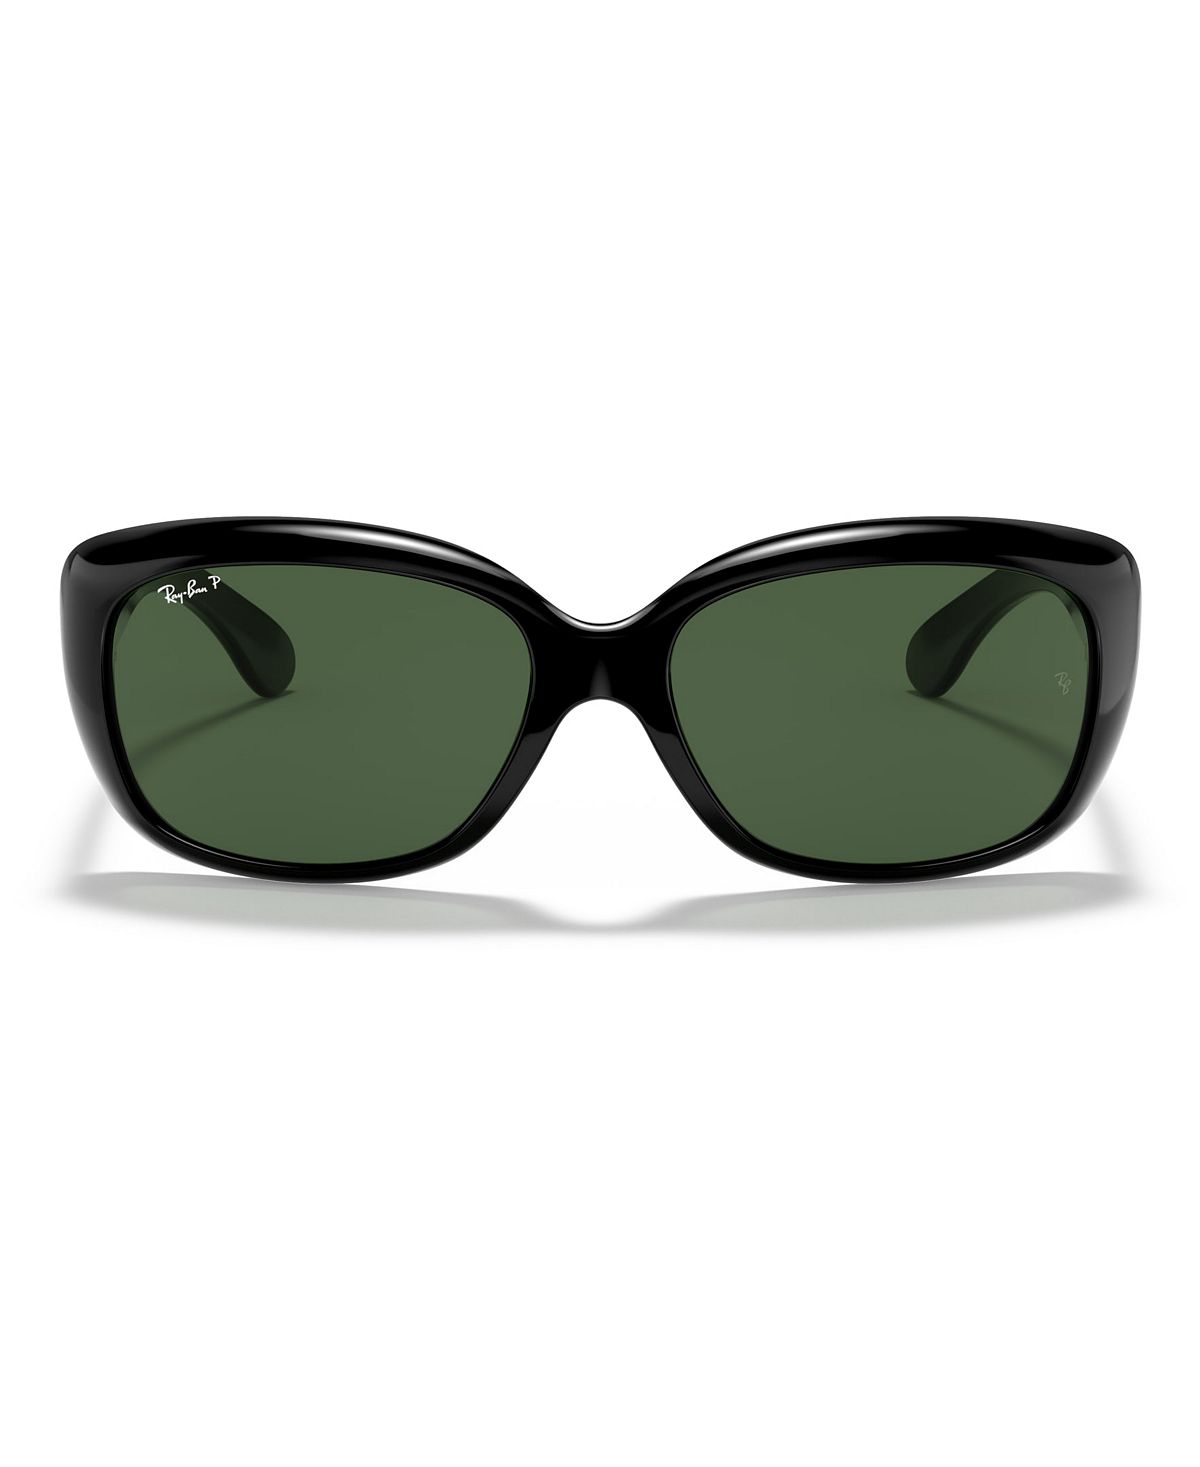 Поляризационные солнцезащитные очки, RB4101 JACKIE OHH Ray-Ban